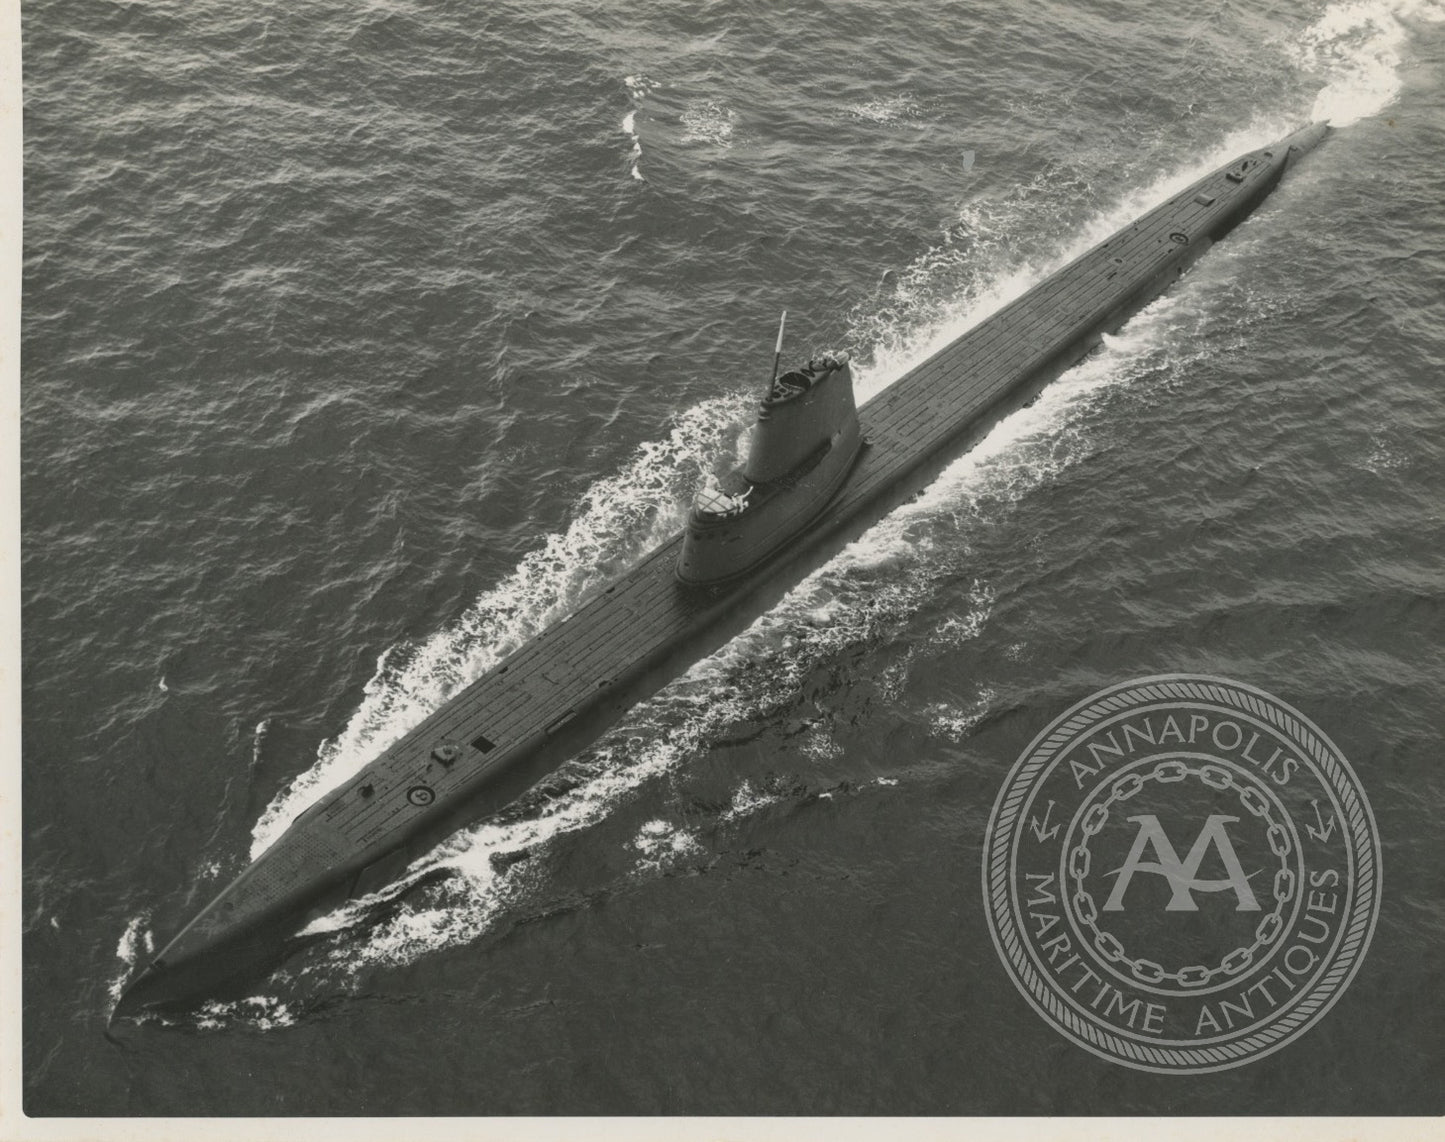 USS Becuna (SS-319) Submarine